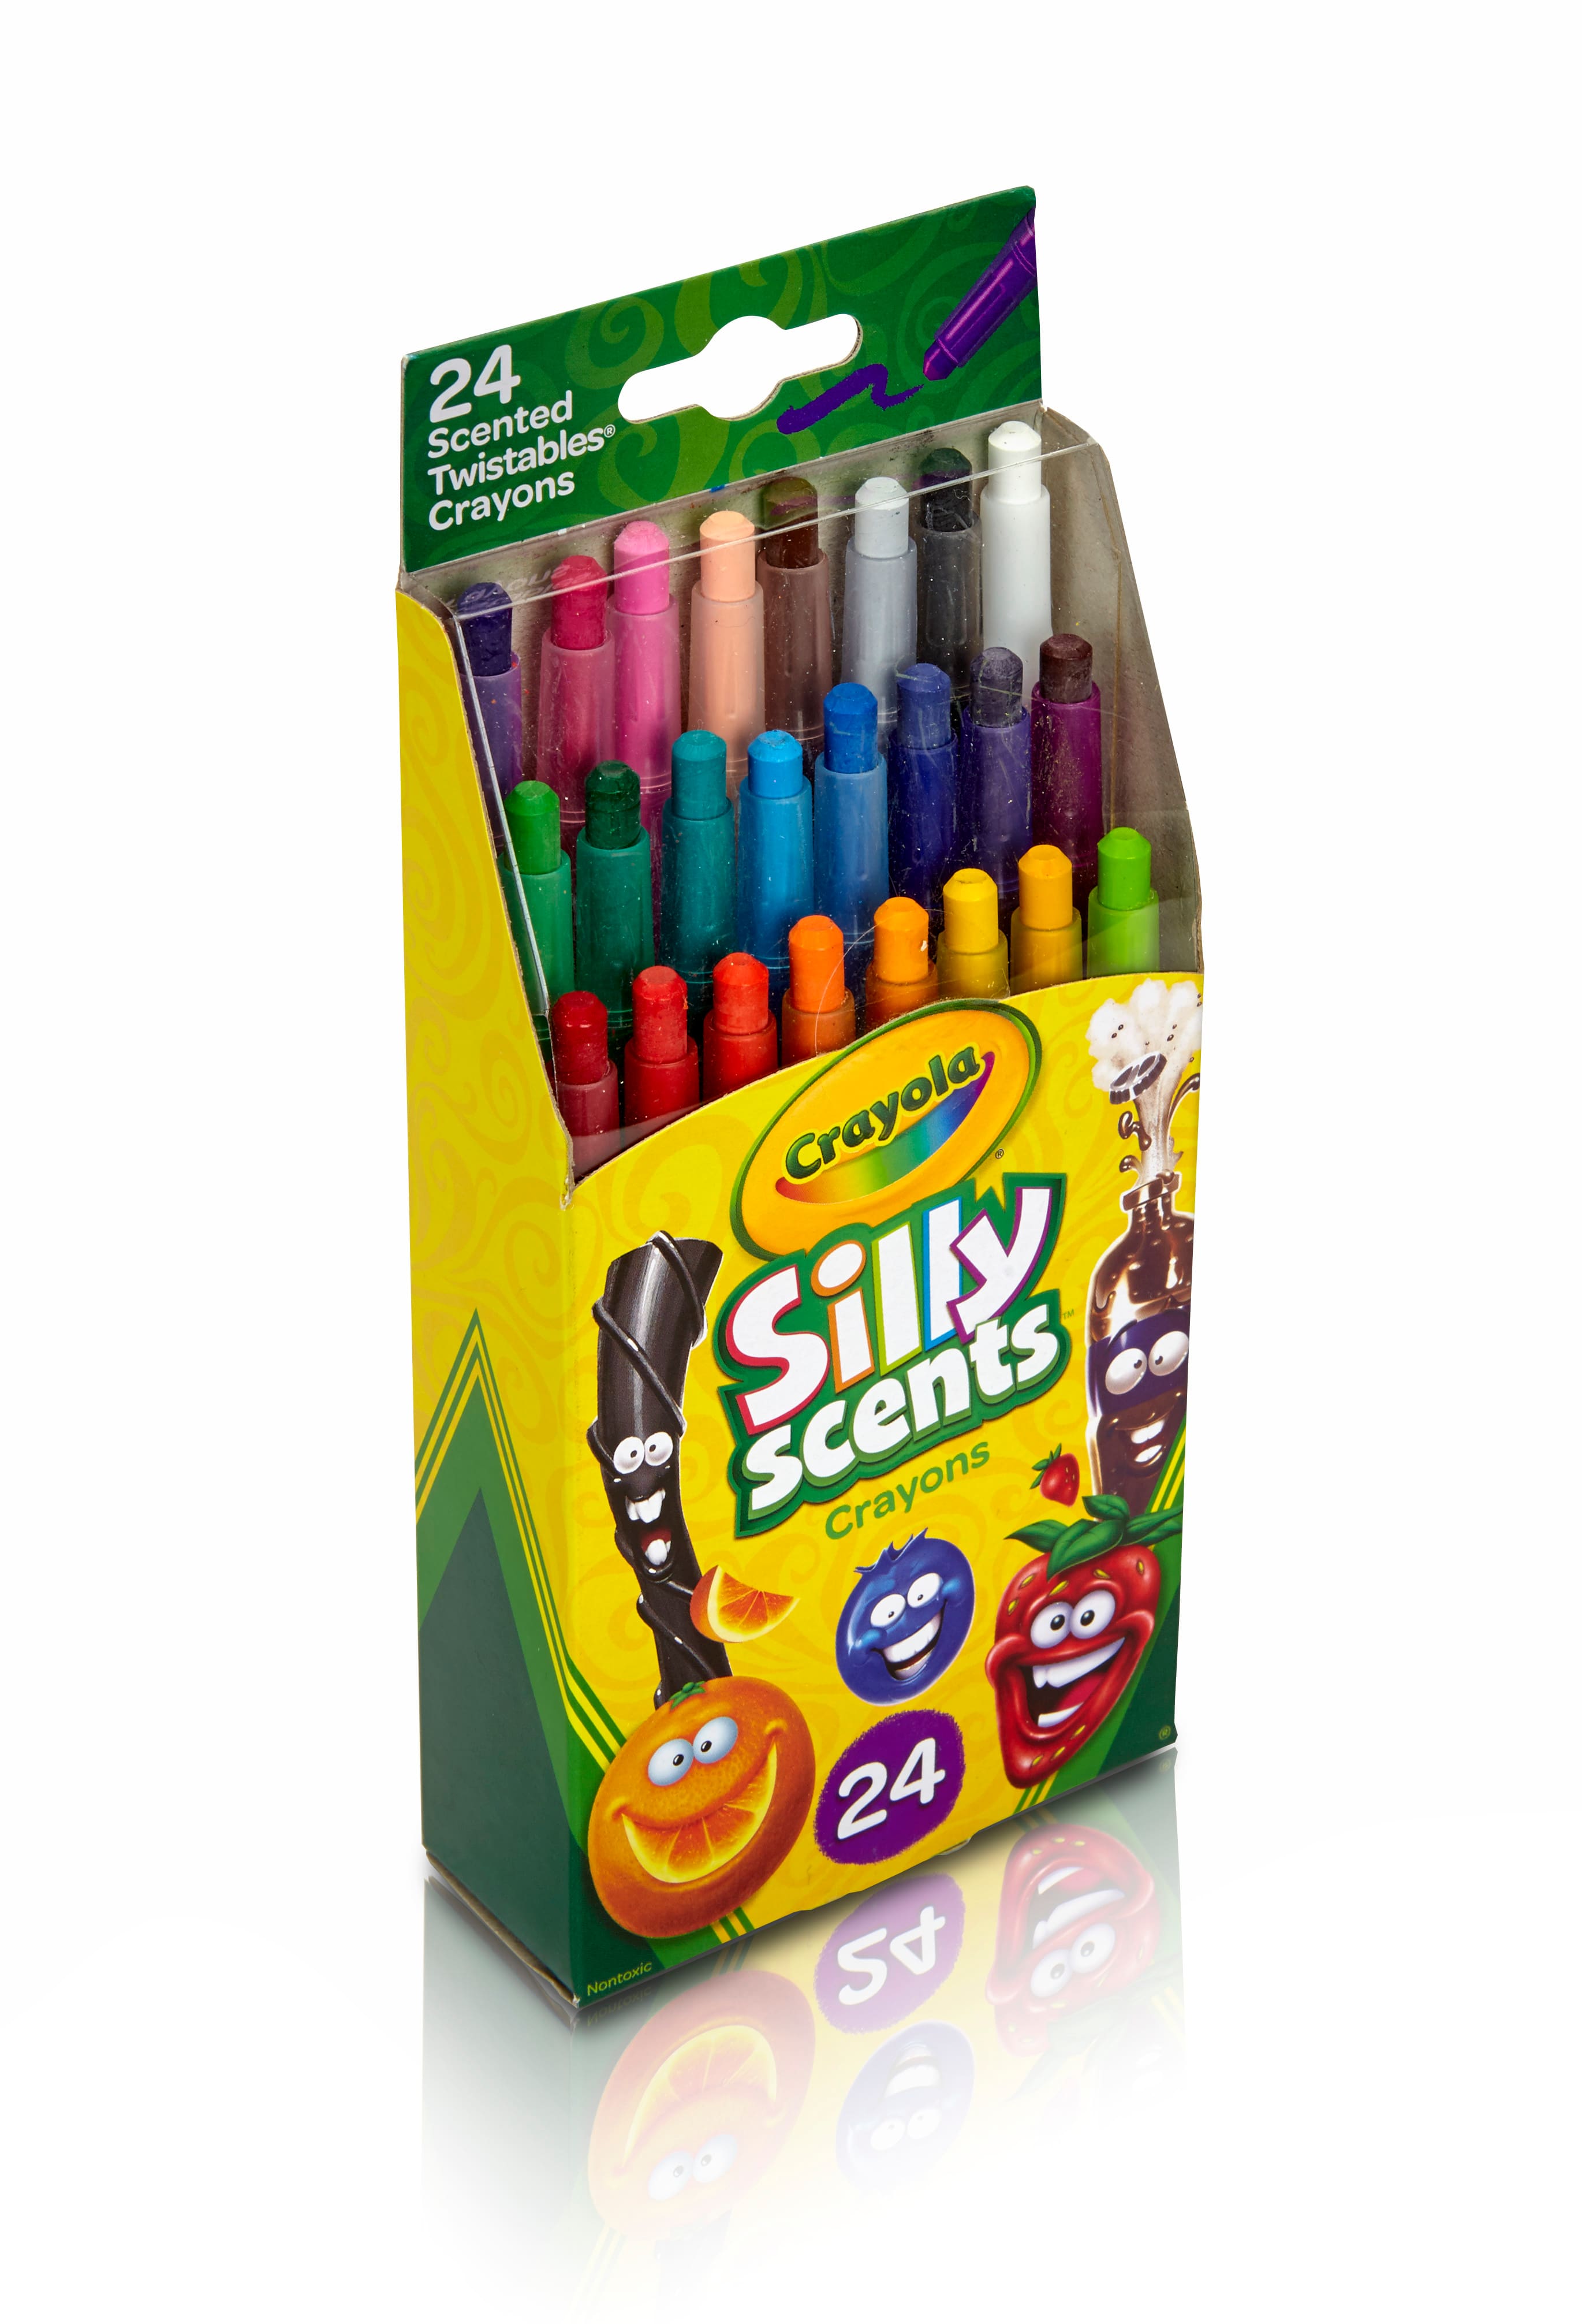 Crayola Mini Twistables Crayons - 24 Pack